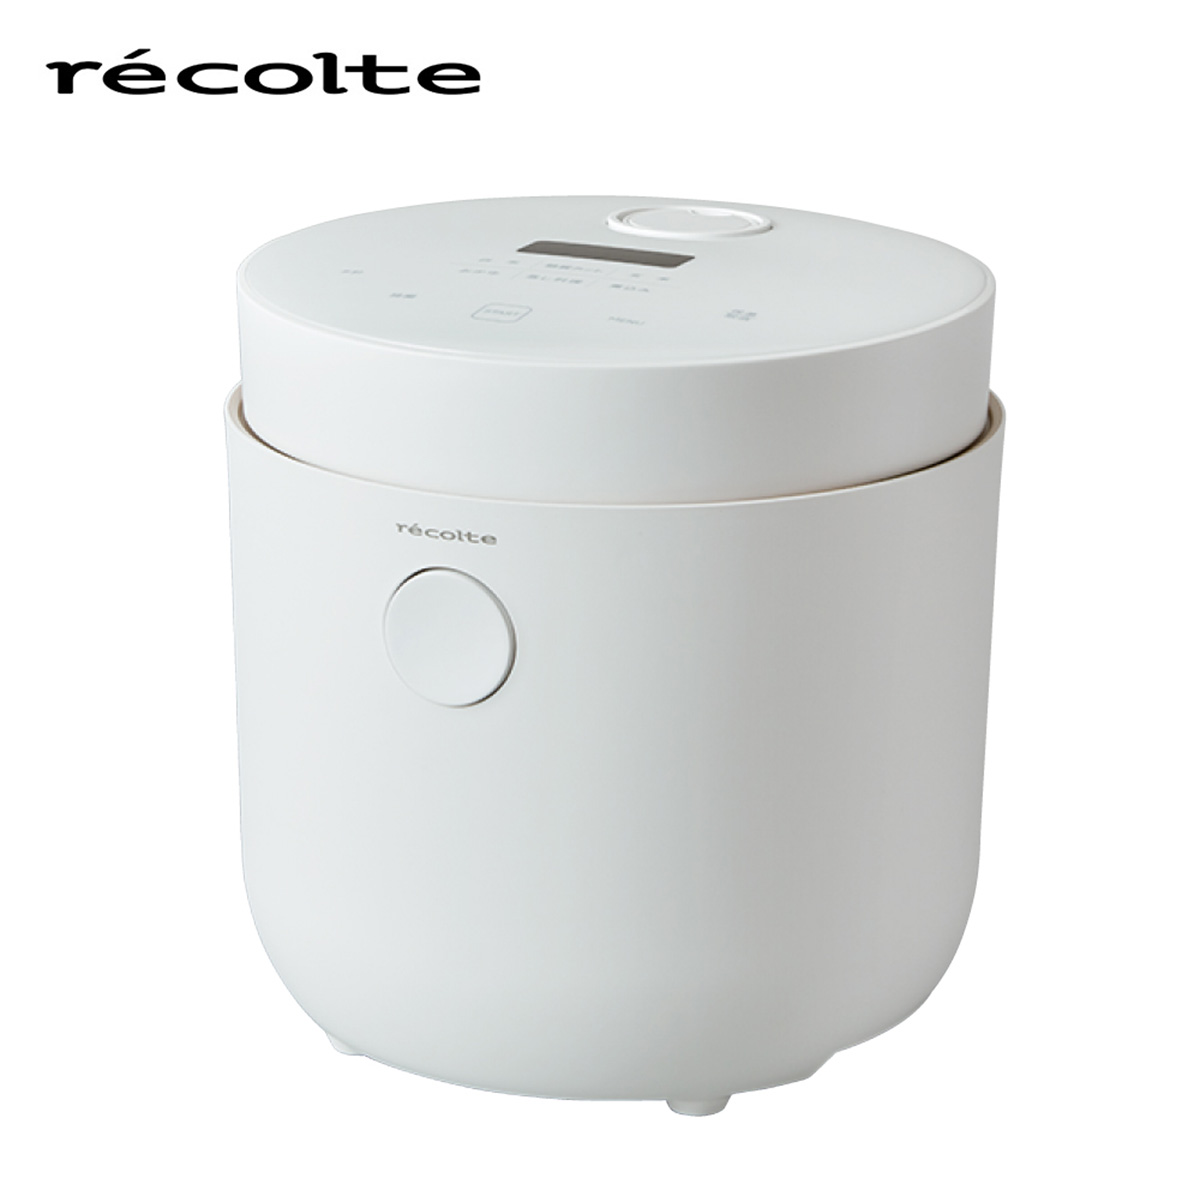 recolte(レコルト) ヘルシーライスクッカー ホワイト RHR-1-W